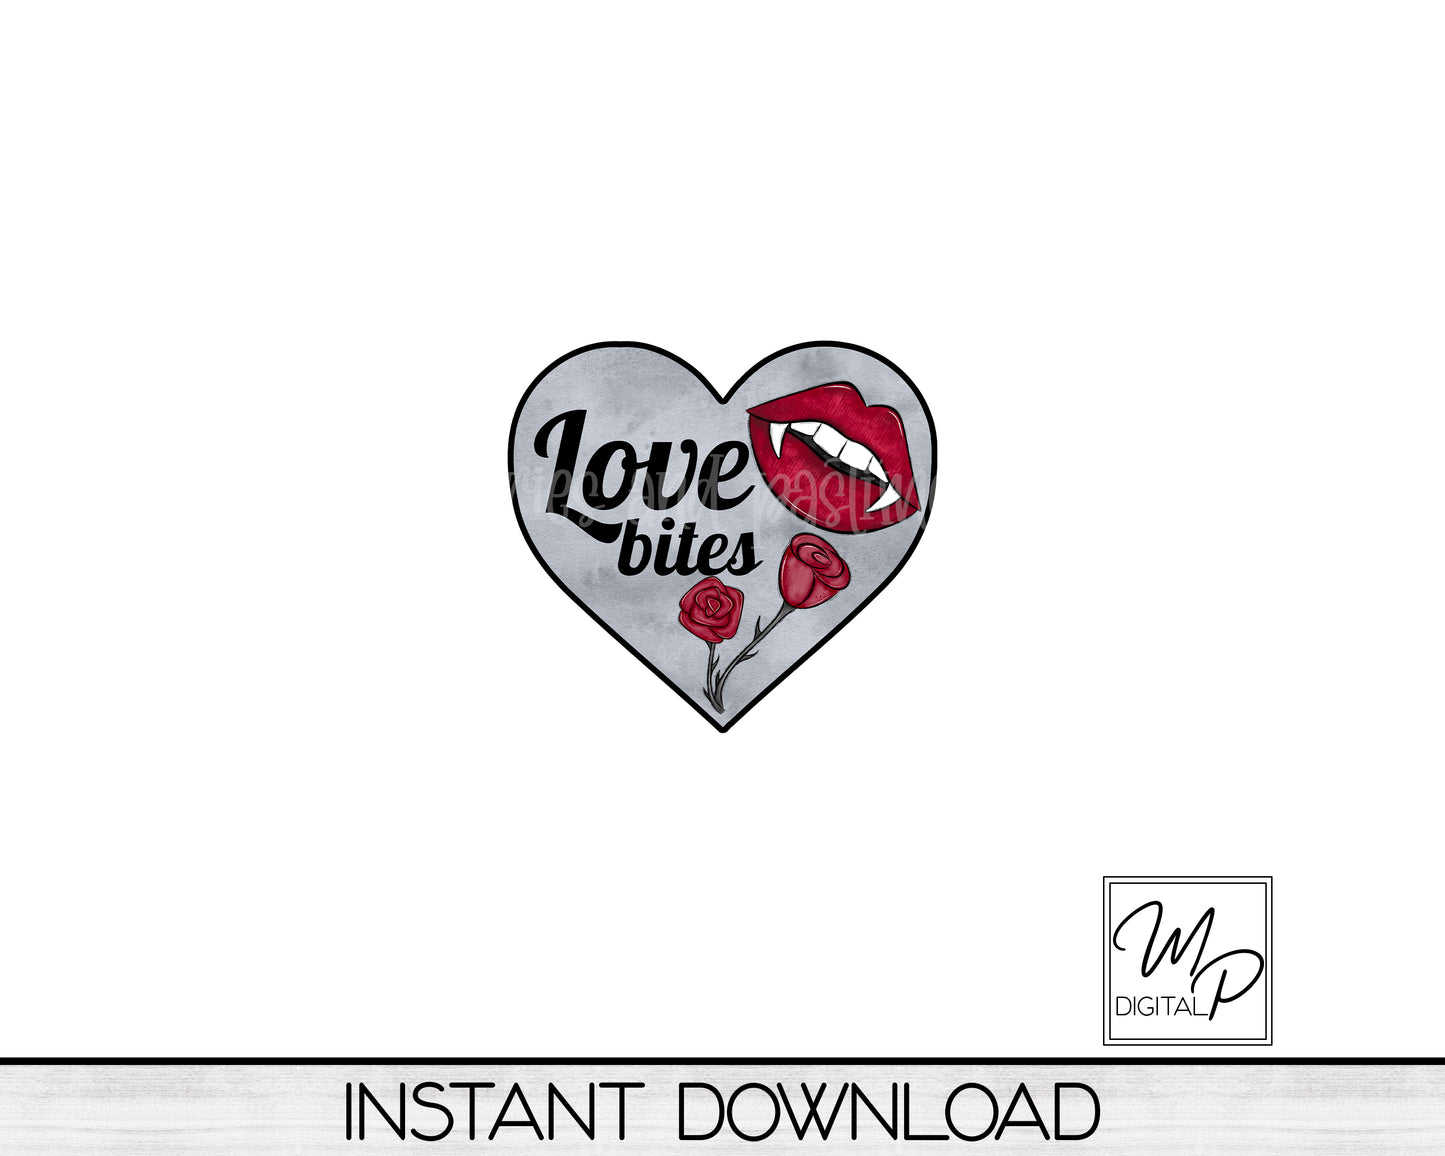 Anti Valentine Heart Earring PNG Design for Sublimation, Love Bites, Digital Download